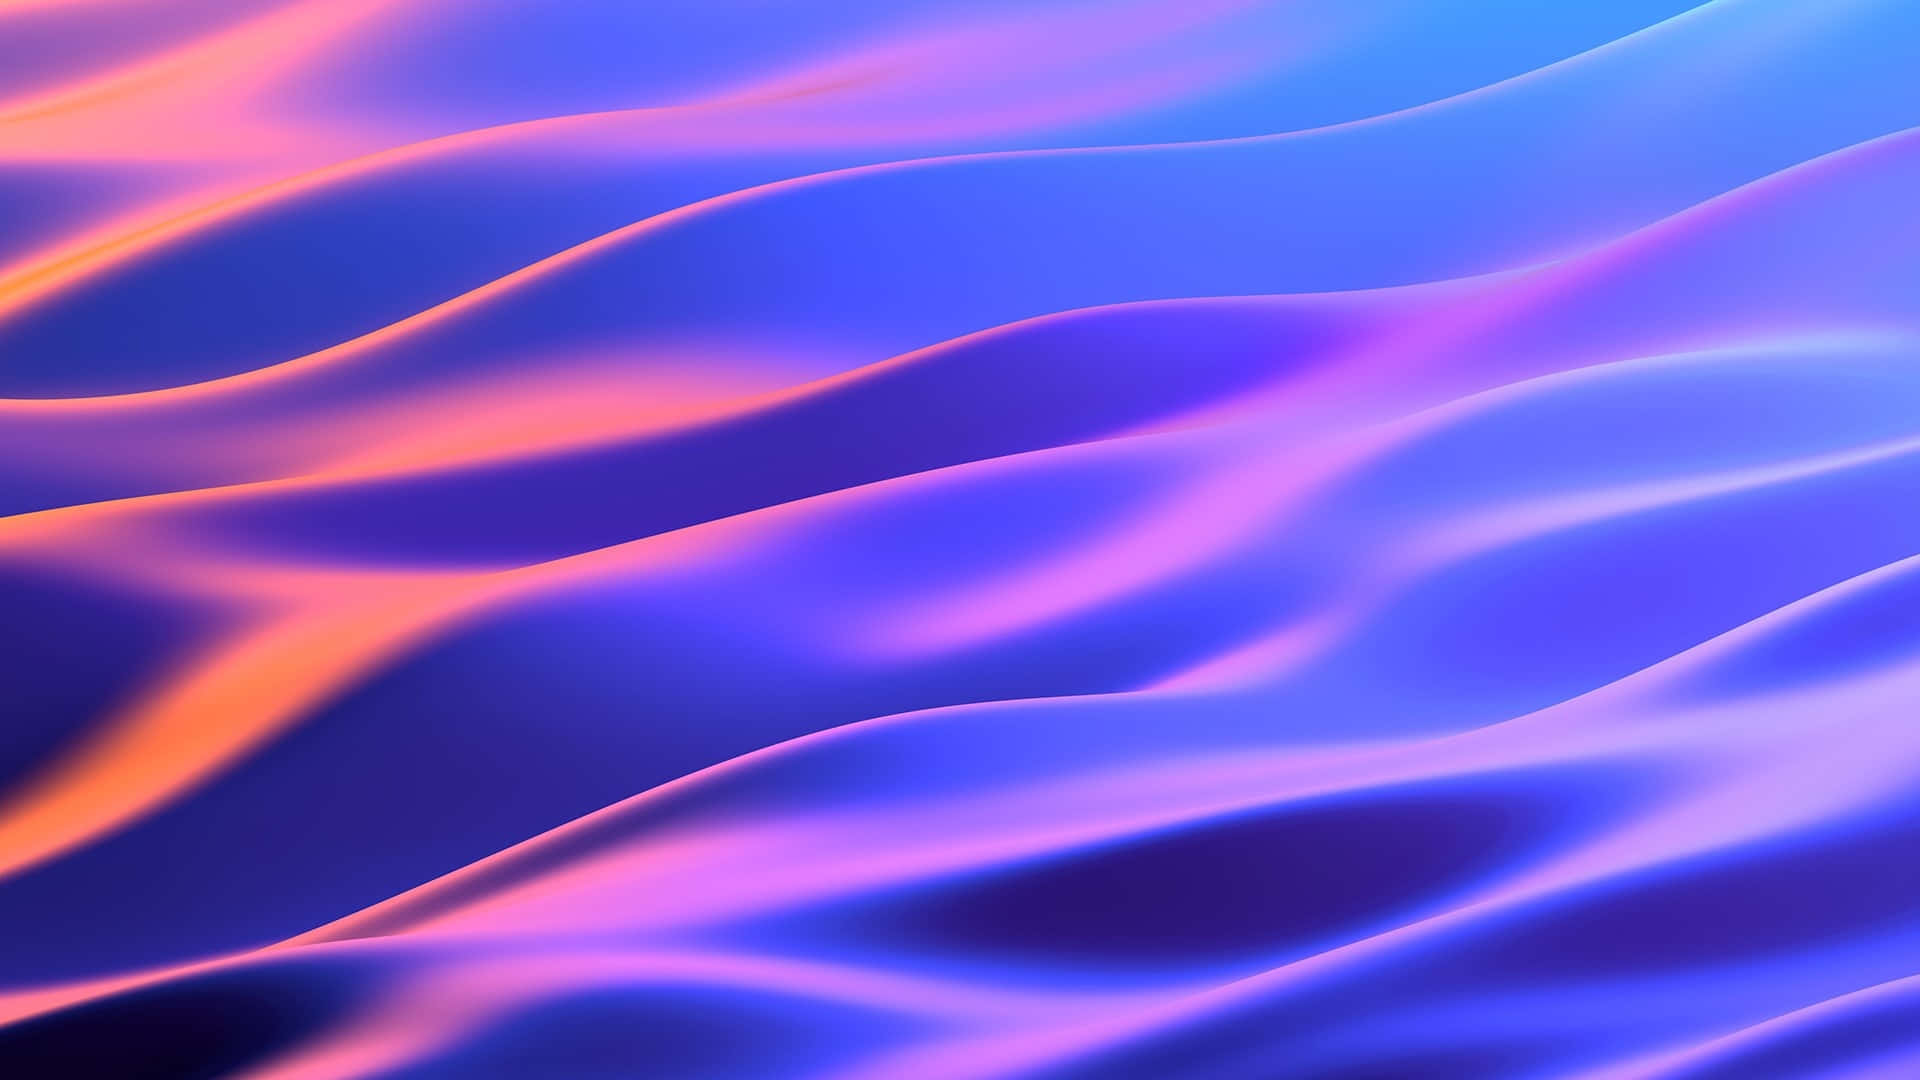 Vibrant Neon Waves Background Wallpaper